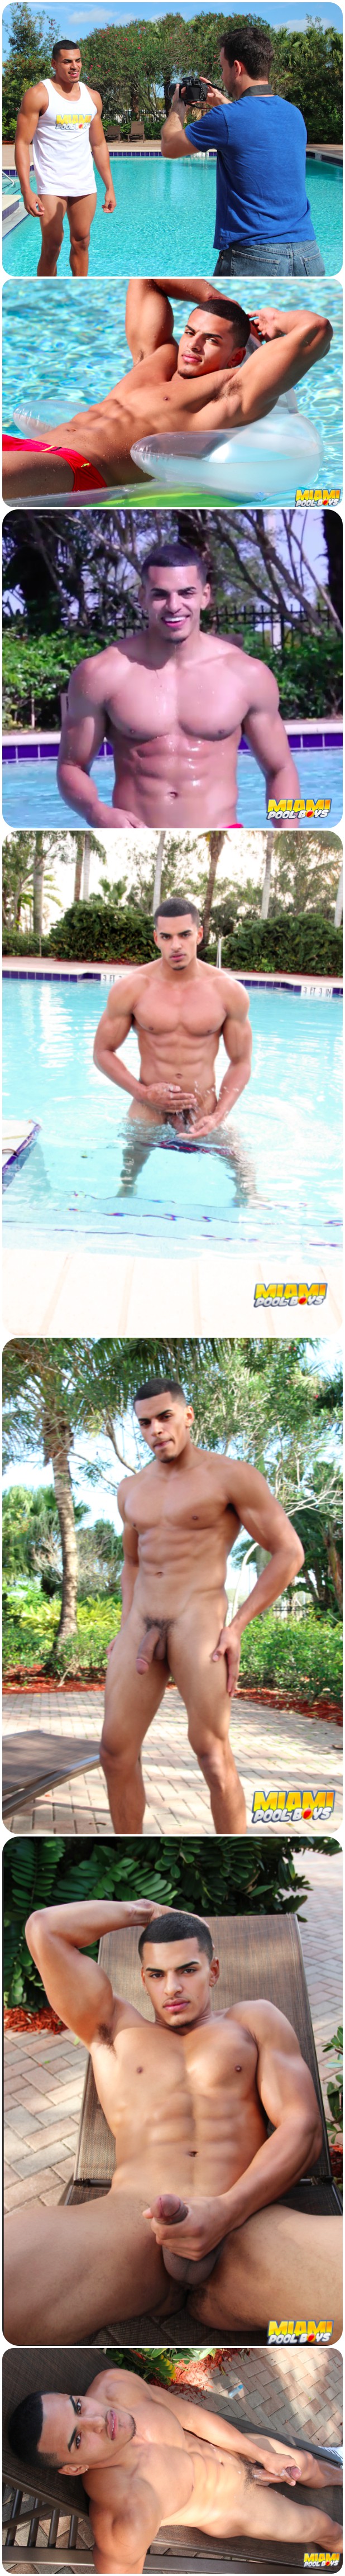 Miami Pool Boys, Quincy Soto